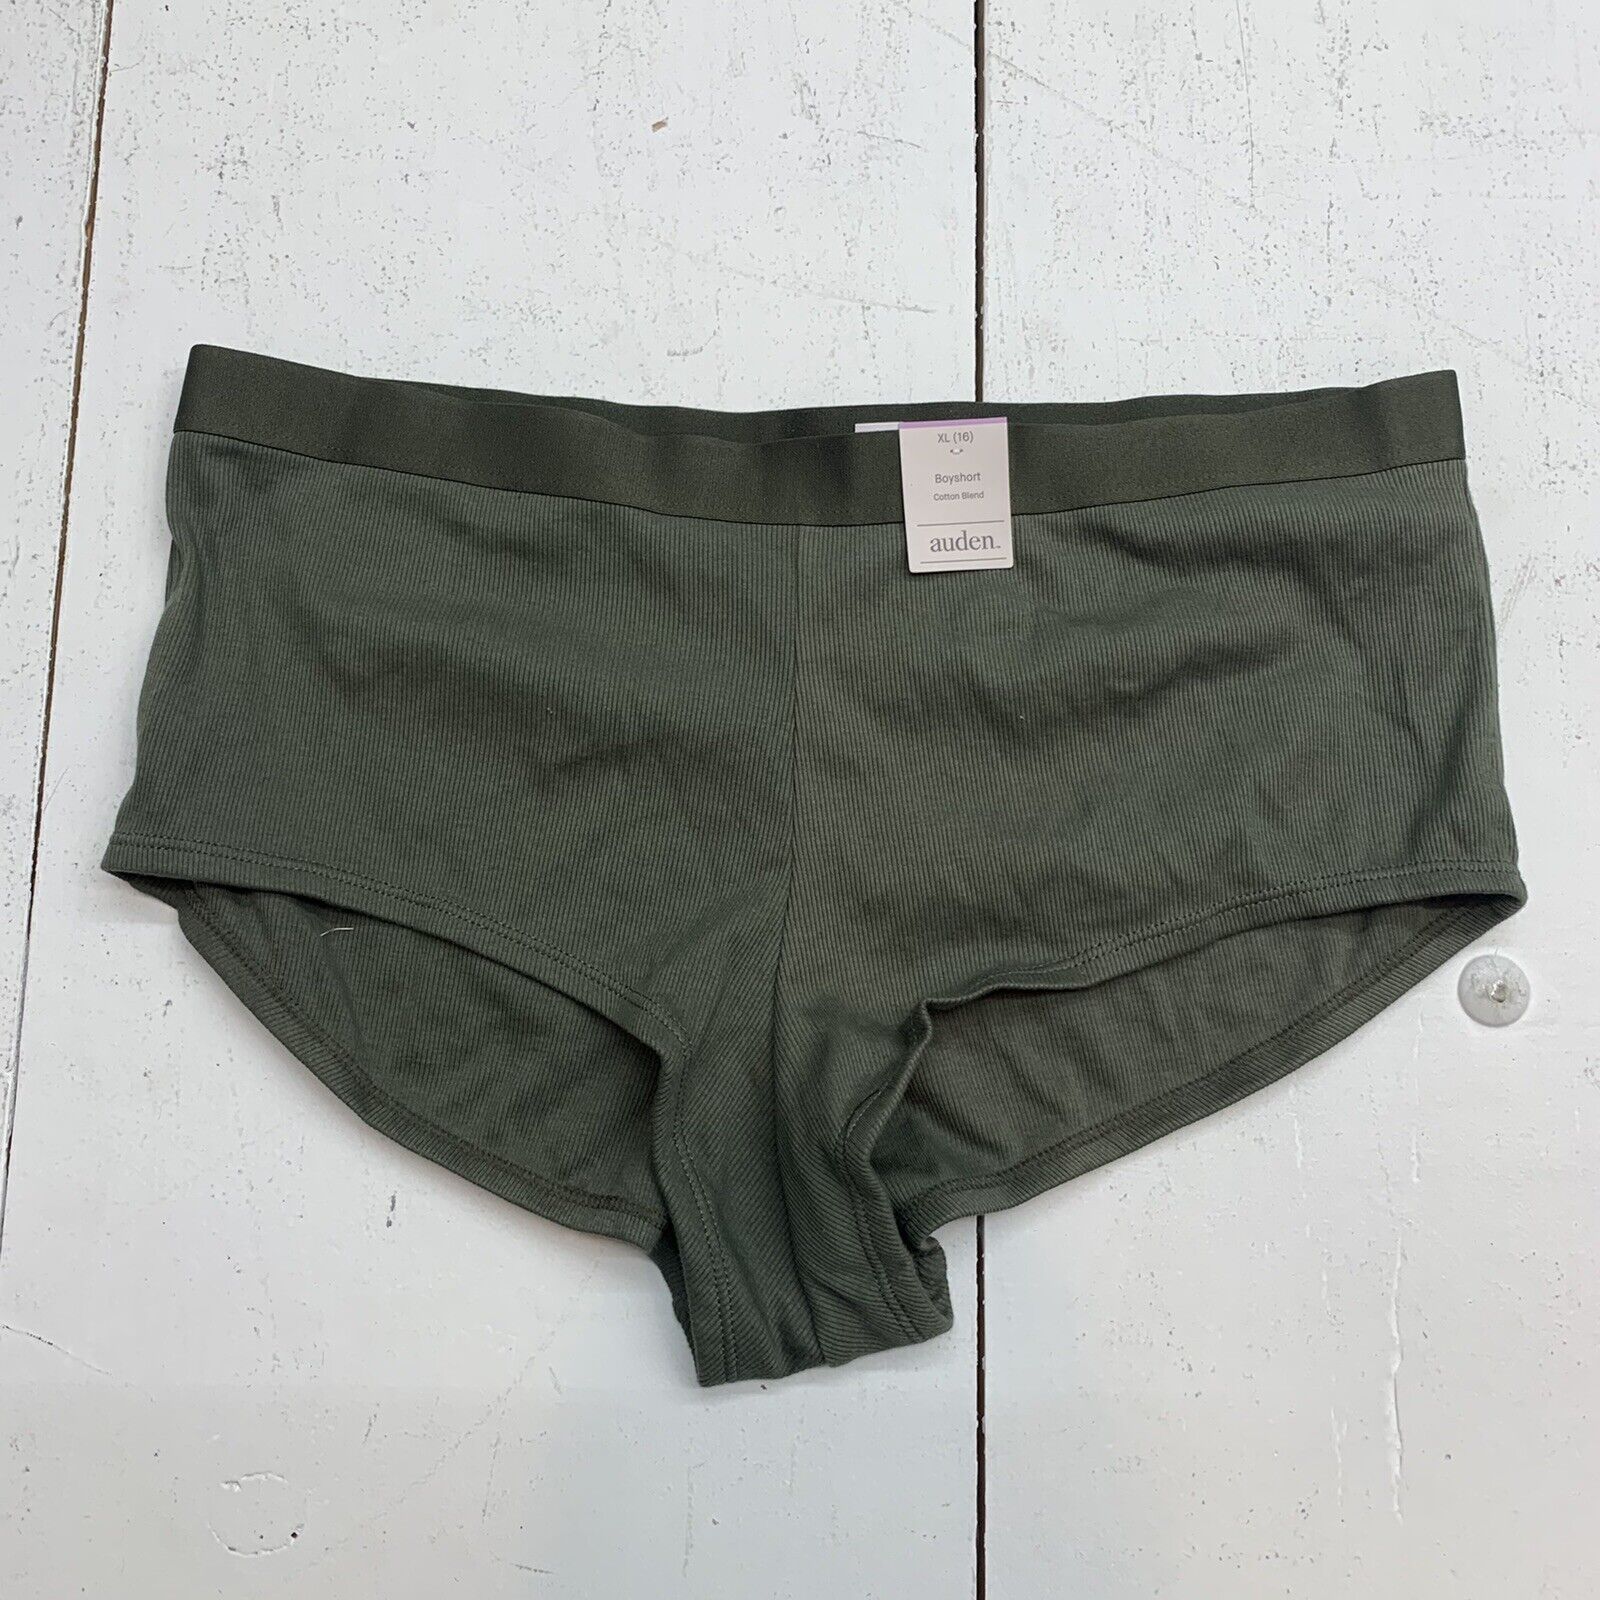 Women's Cotton and Lace Boy Shorts - Auden™ Green XS